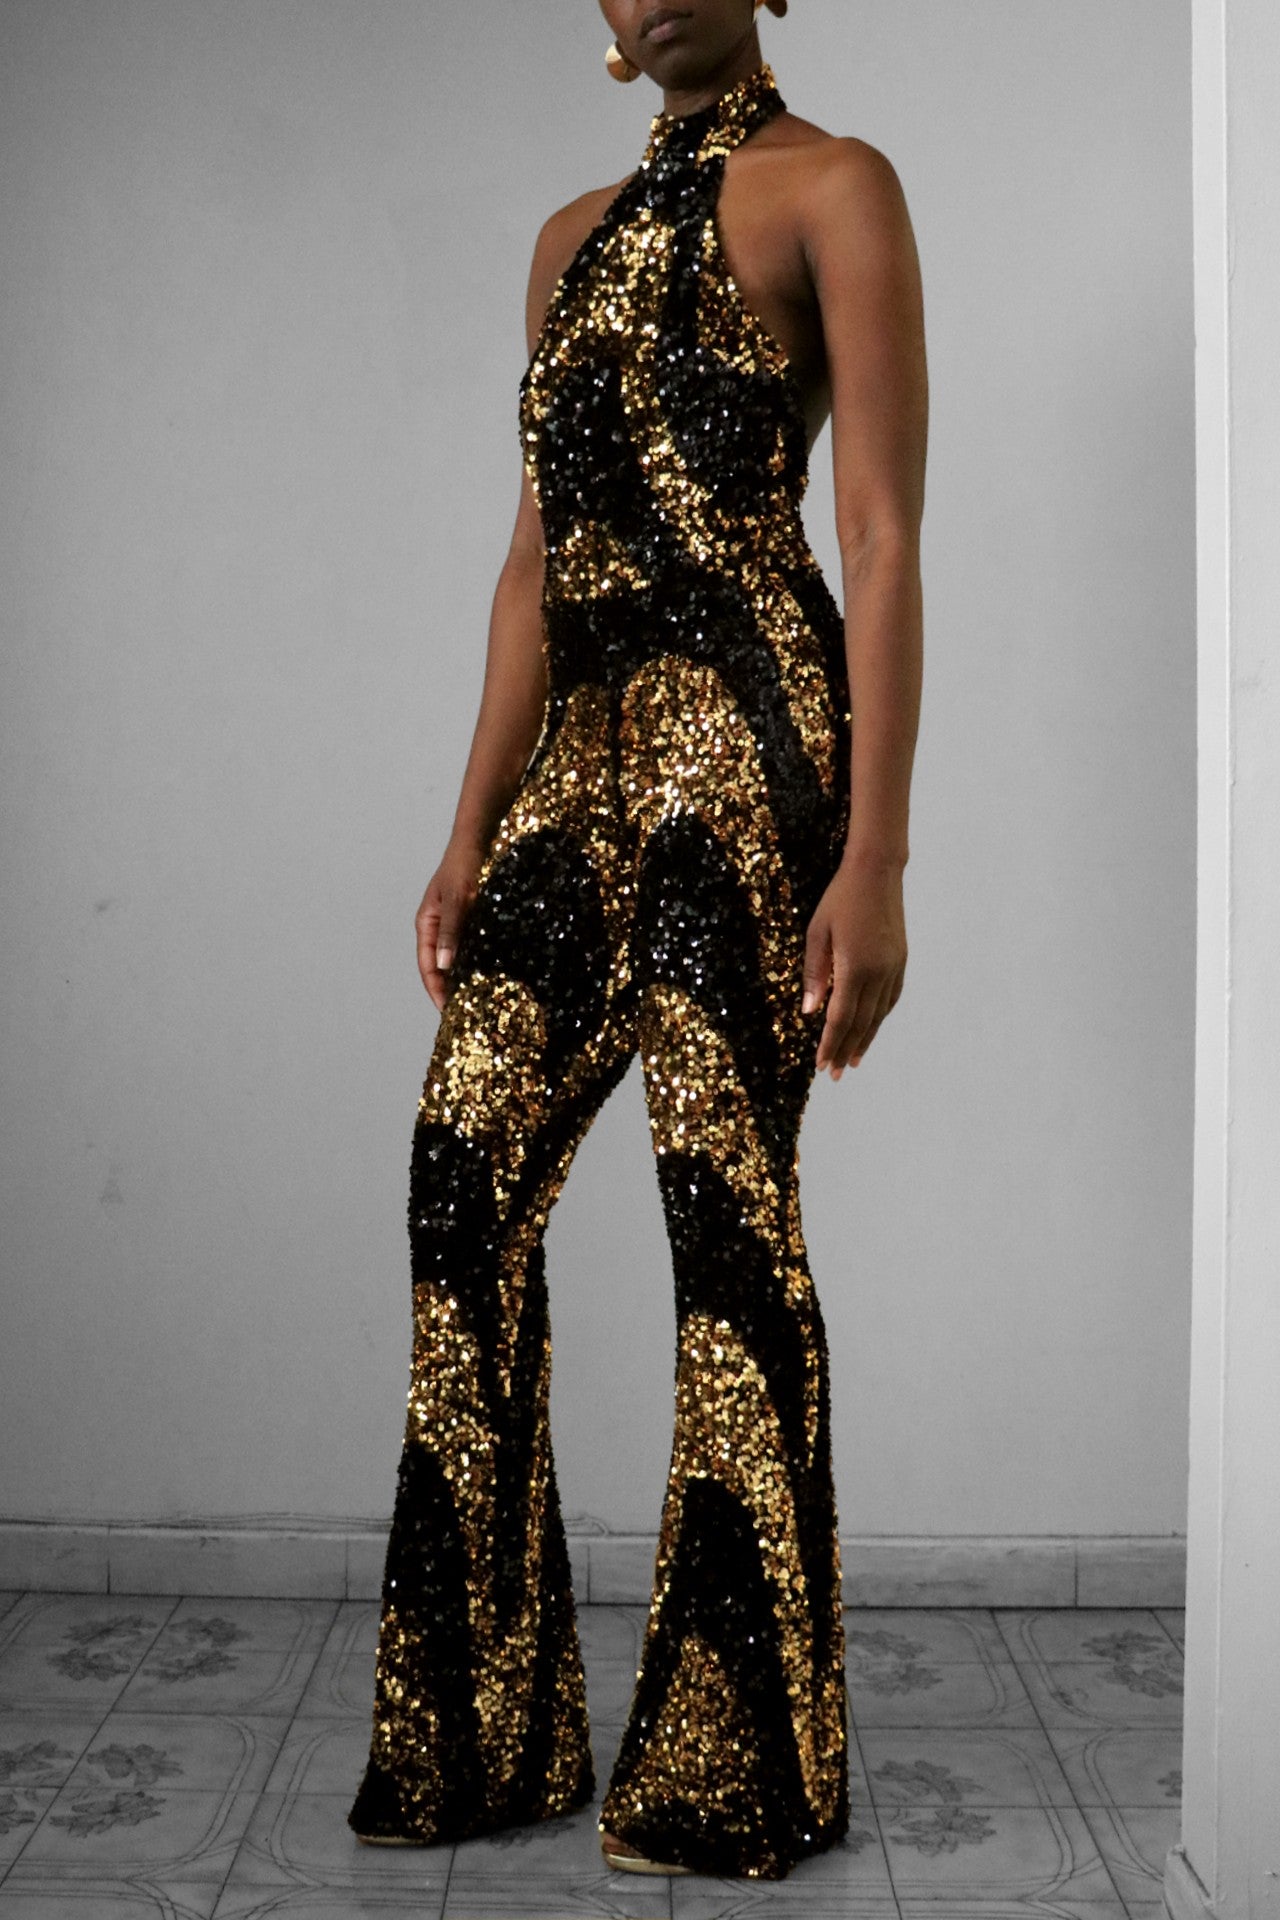 Licorice Swirl Black & Gold Sequin Halter Jumpsuit